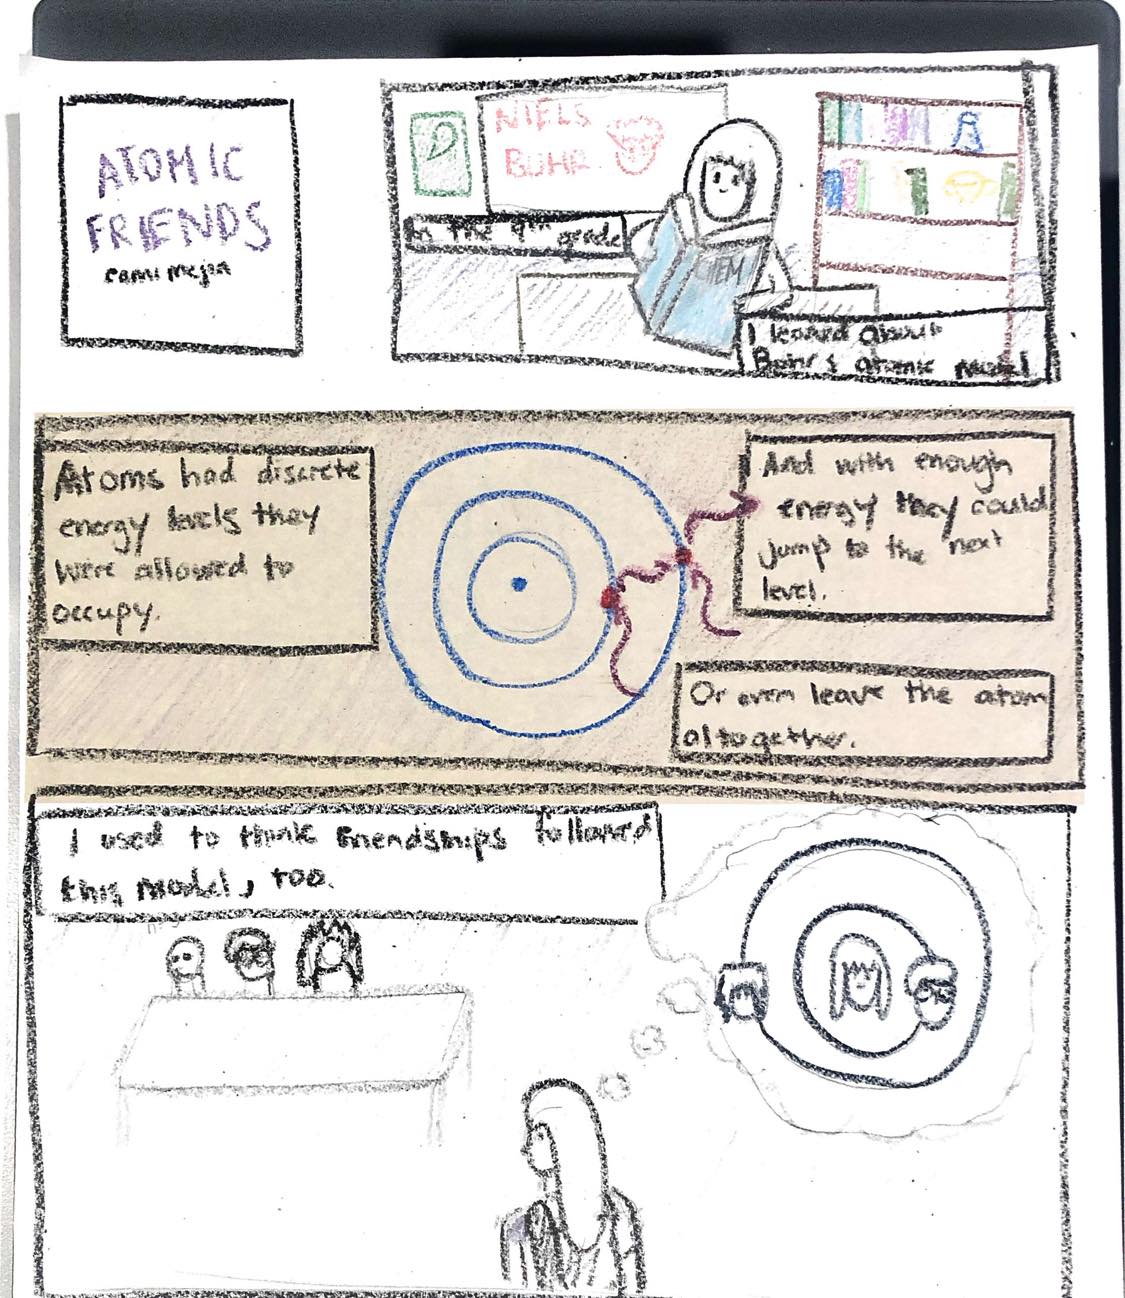 atomic friends page 1, the script of the comic is written below